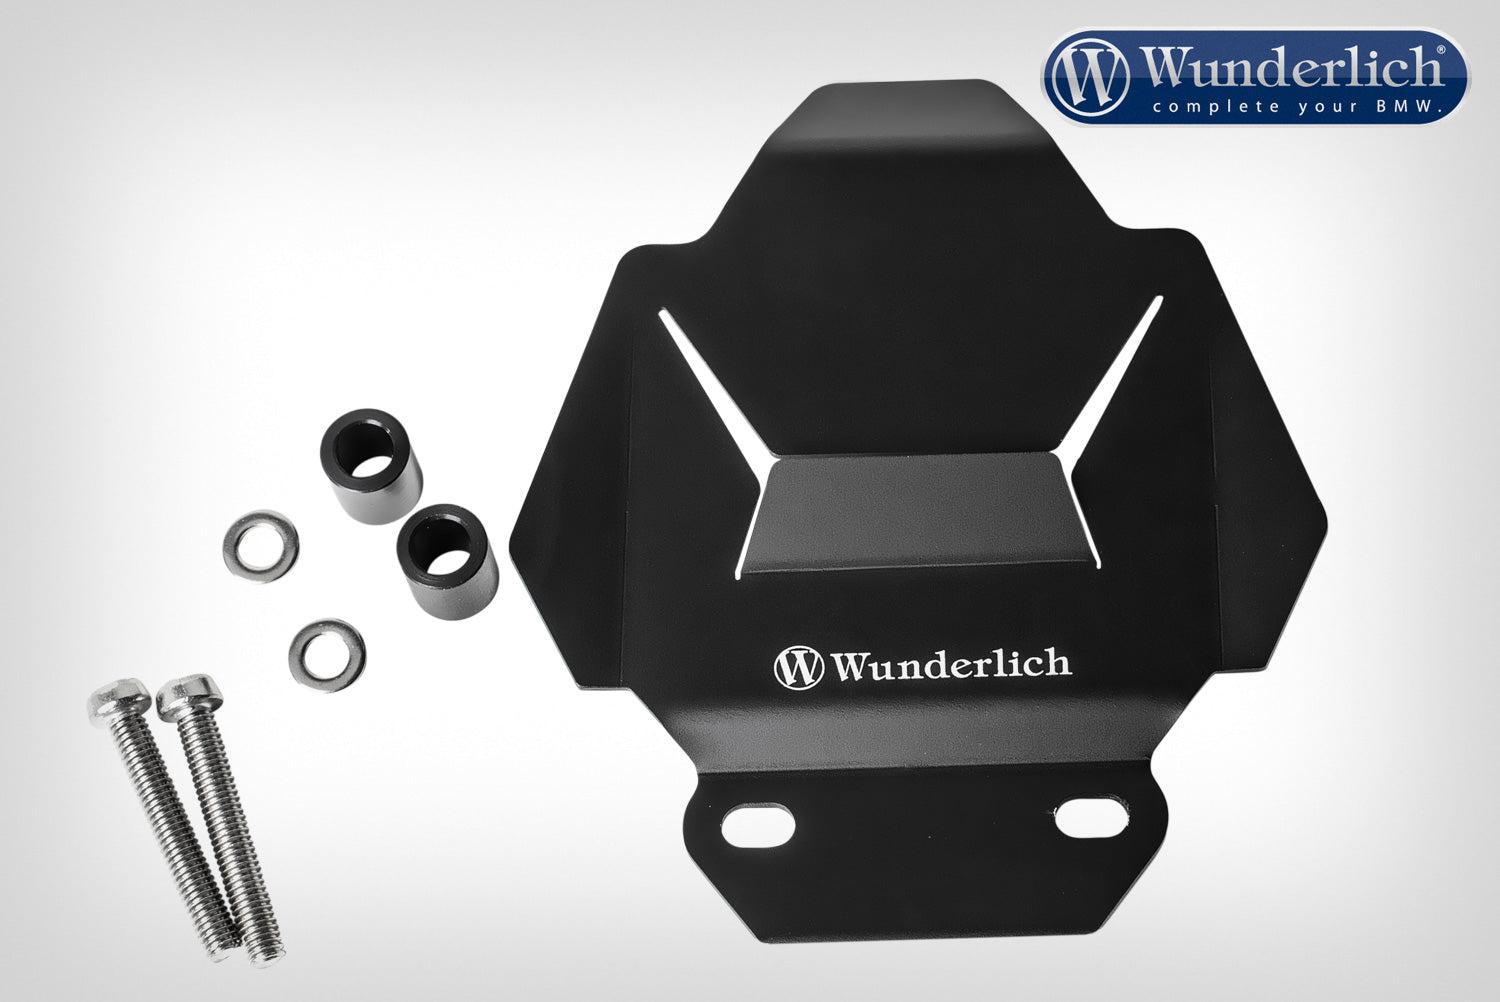 Wunderlich engine housing protection - black